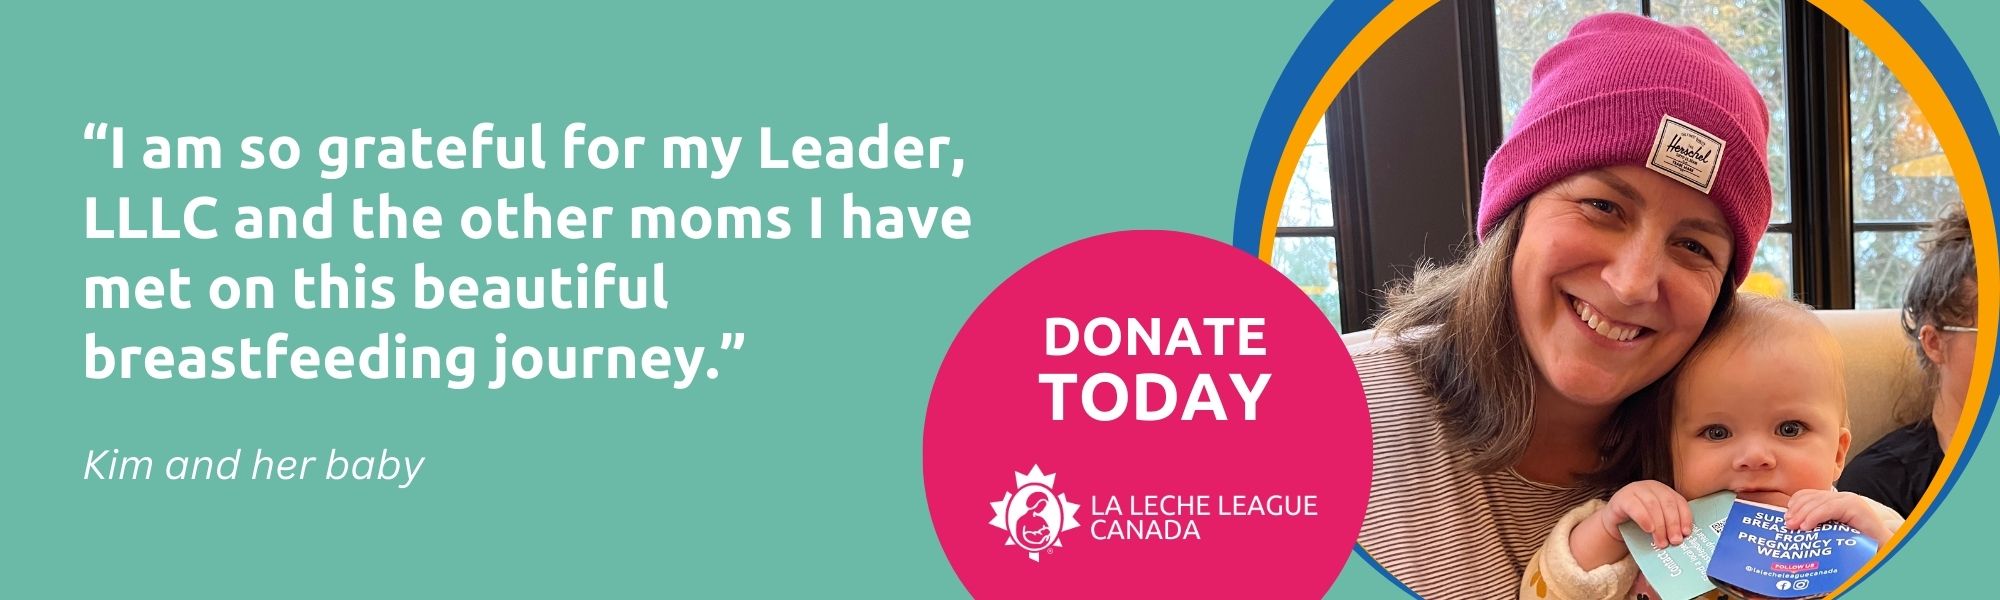 Cross-Nursing  La Leche League Canada - Breastfeeding Support and  Information